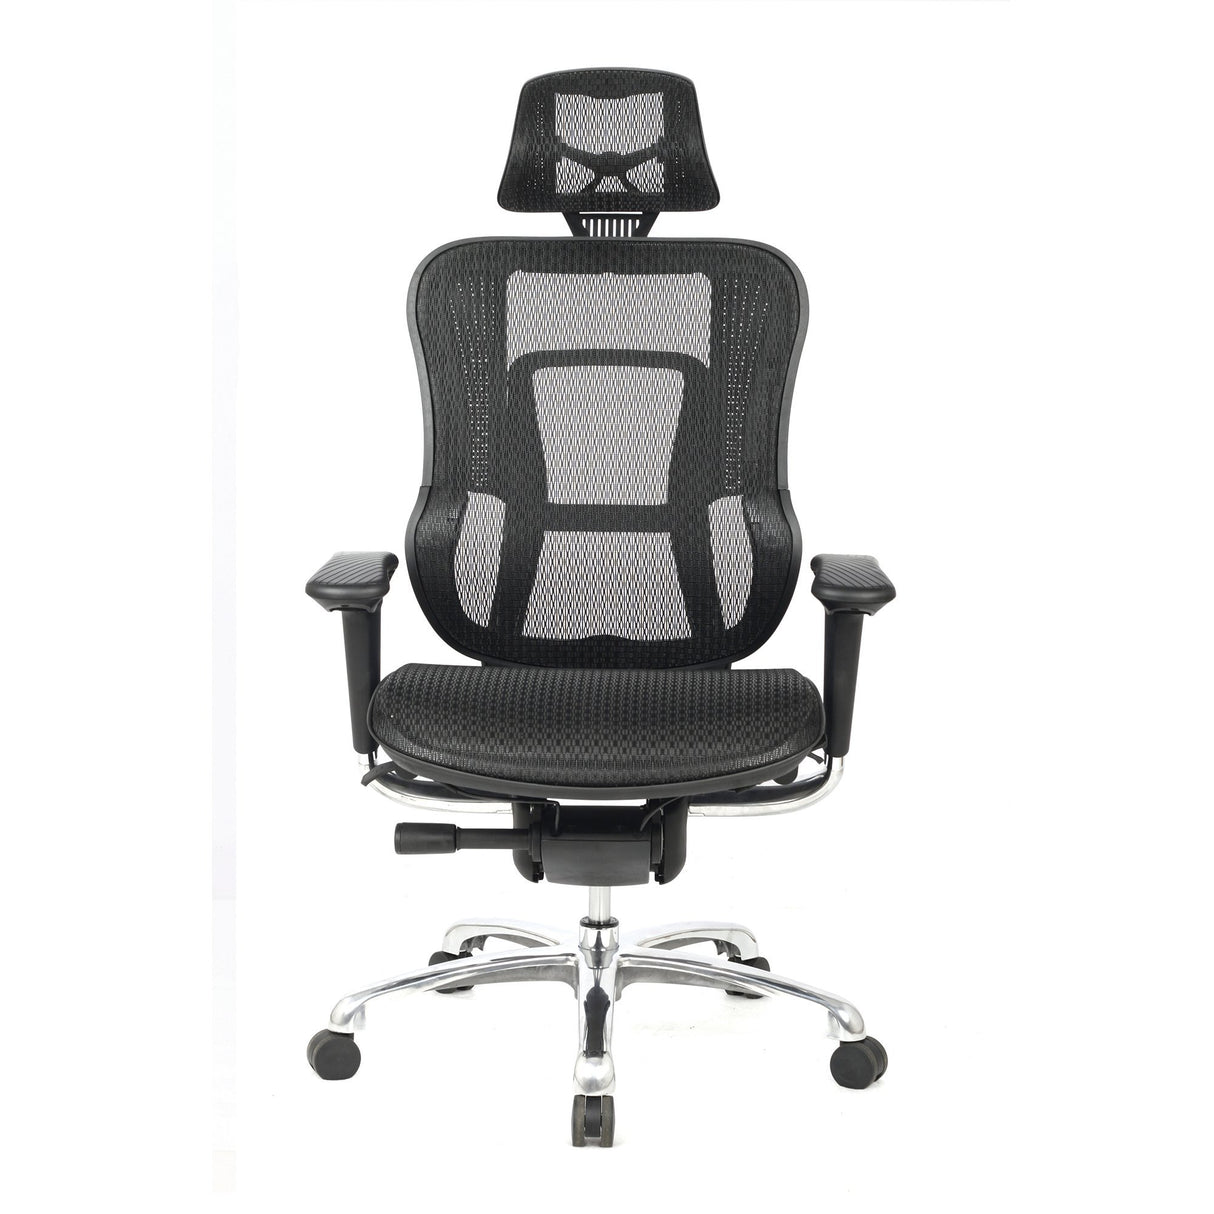 Nautilus Designs Aztec High Back Synchronous Mesh Designer Executive Chair with Adjustable Headrest and Chrome Base - Black